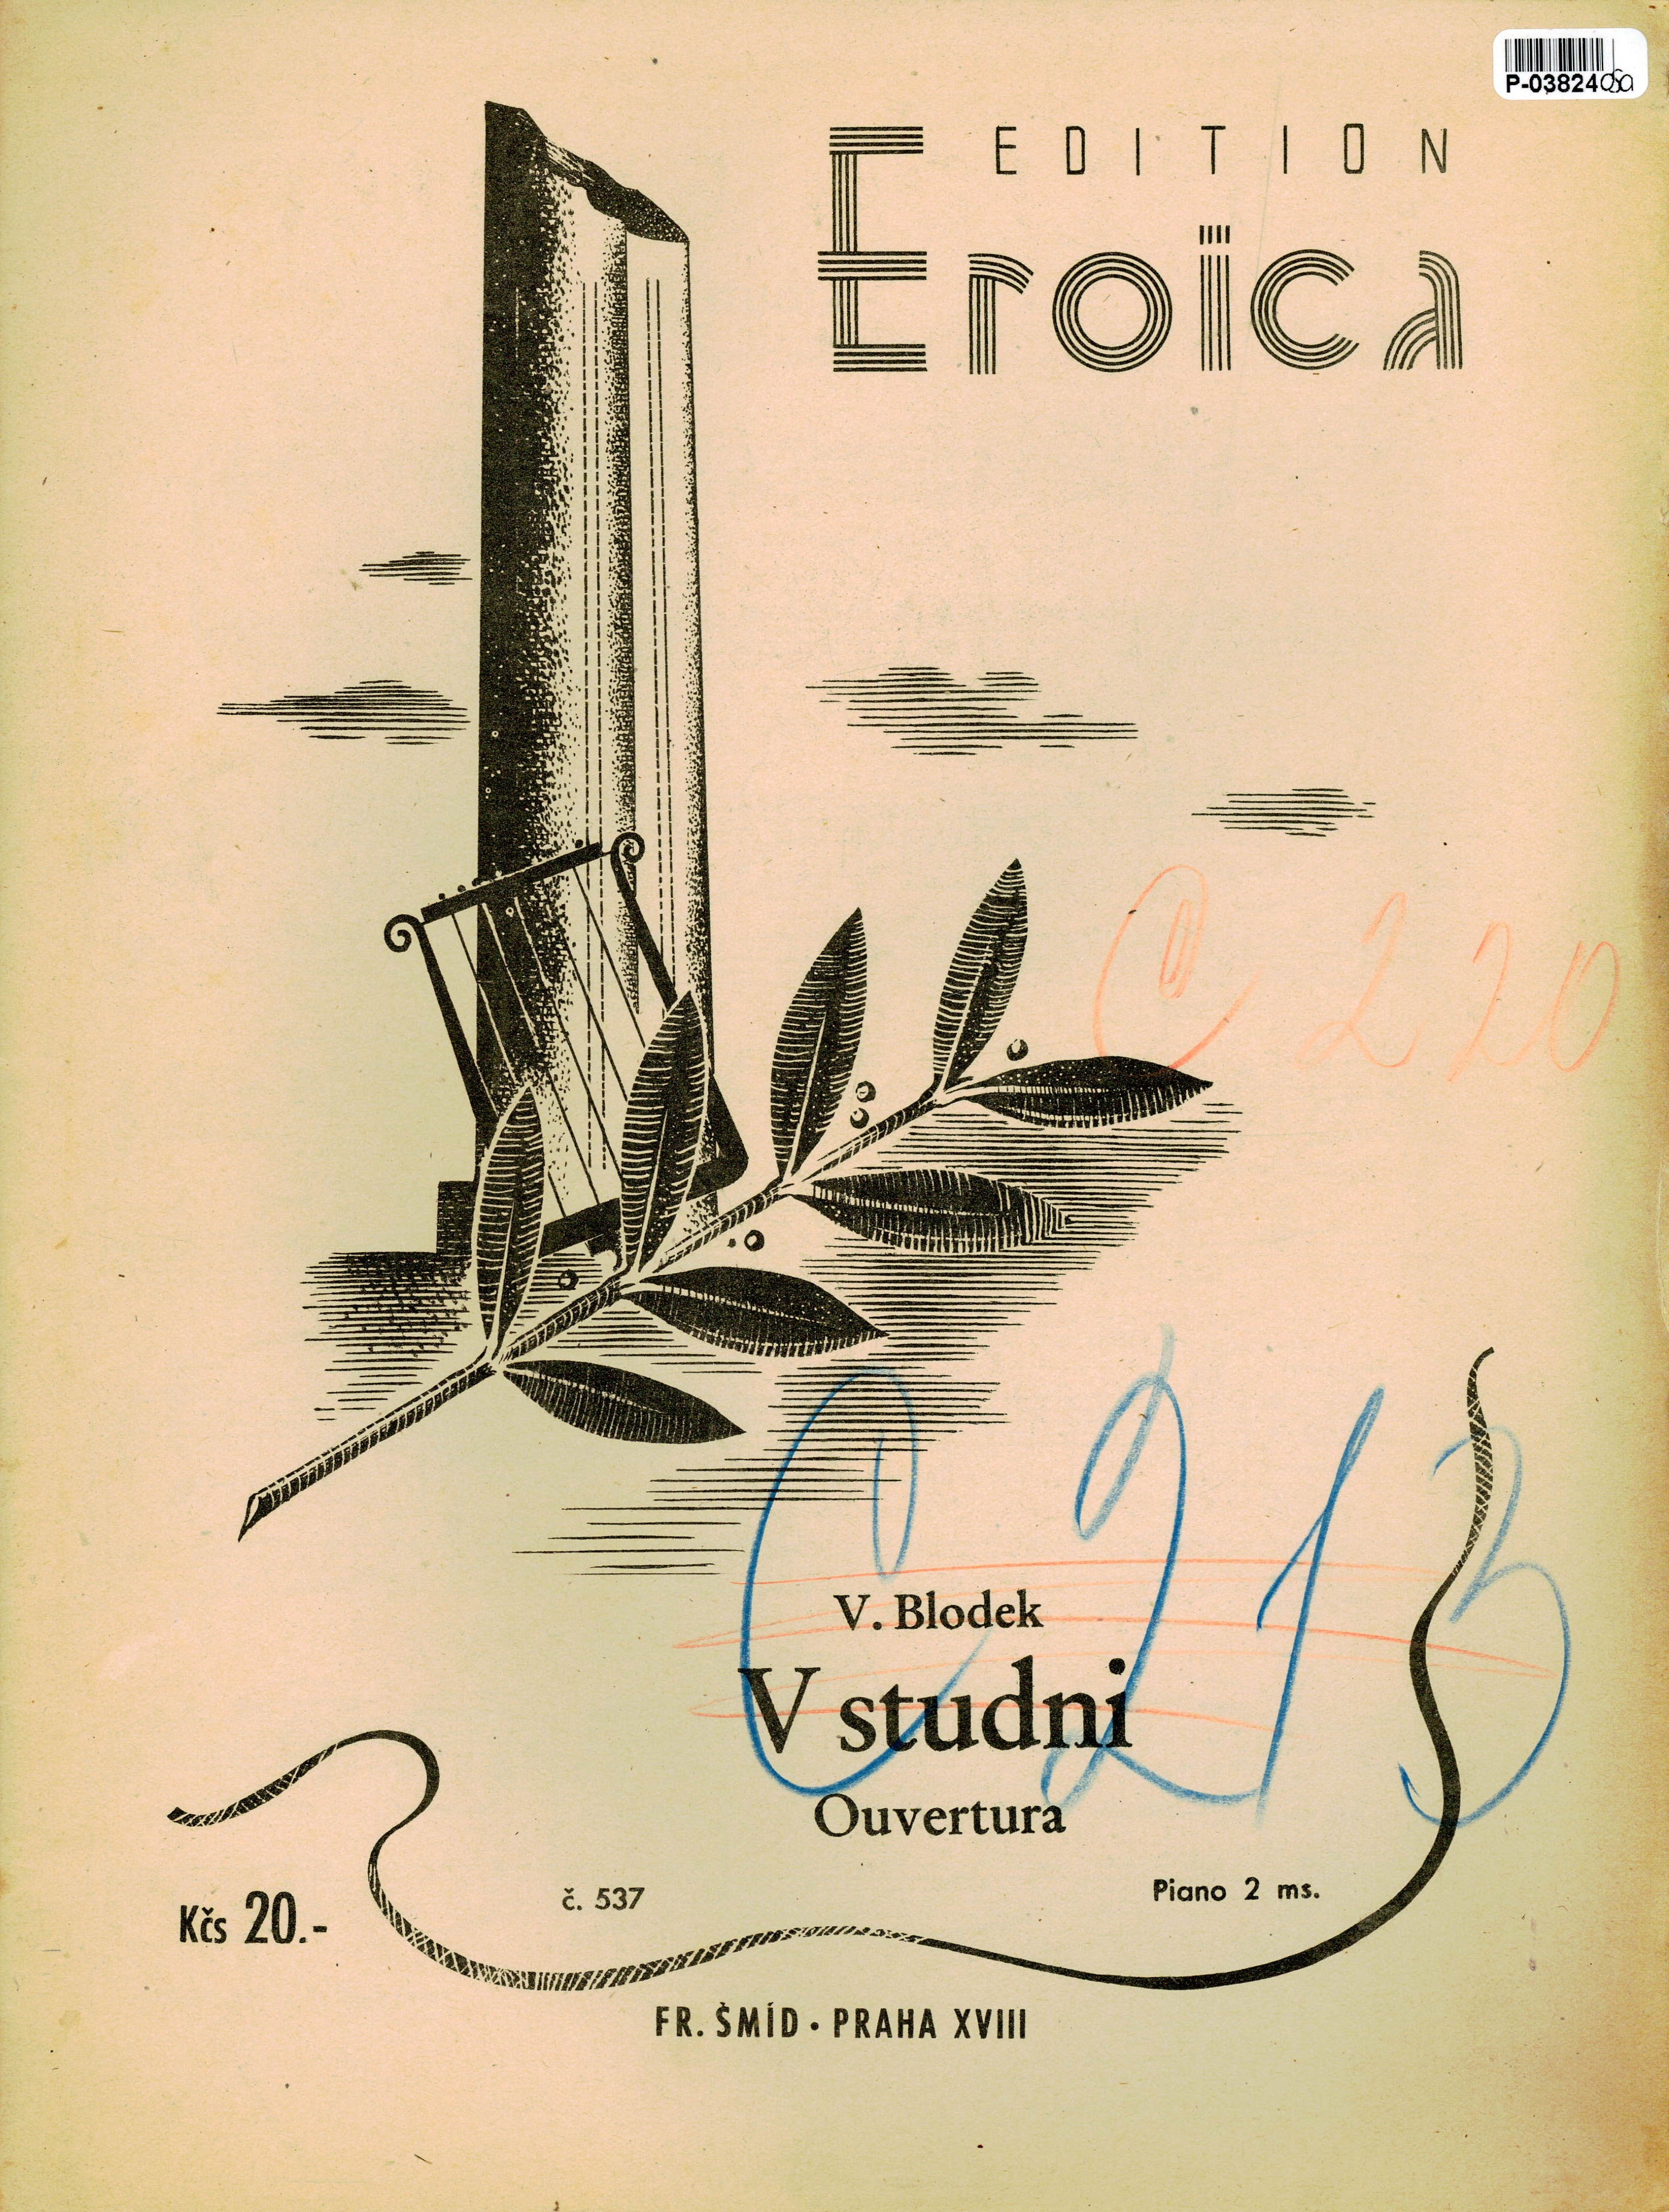 Edition Eroica - V studni